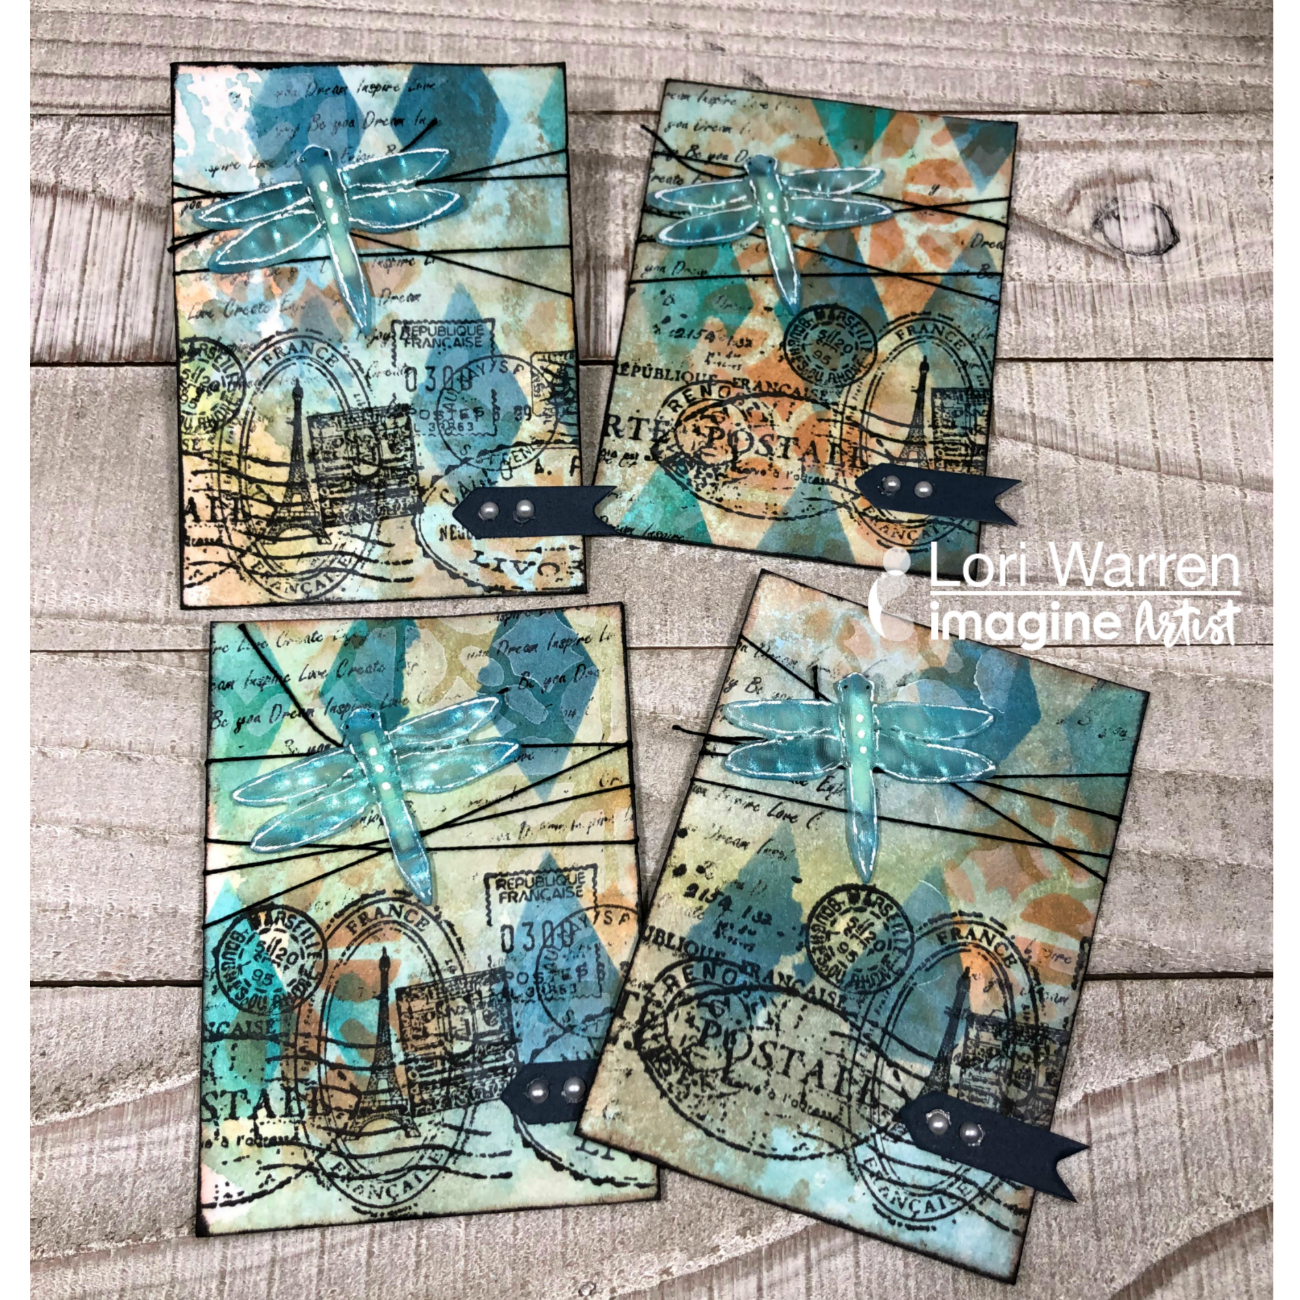 Artist trading cards featuring dragonflies made out of Vertigo crafting sheets.